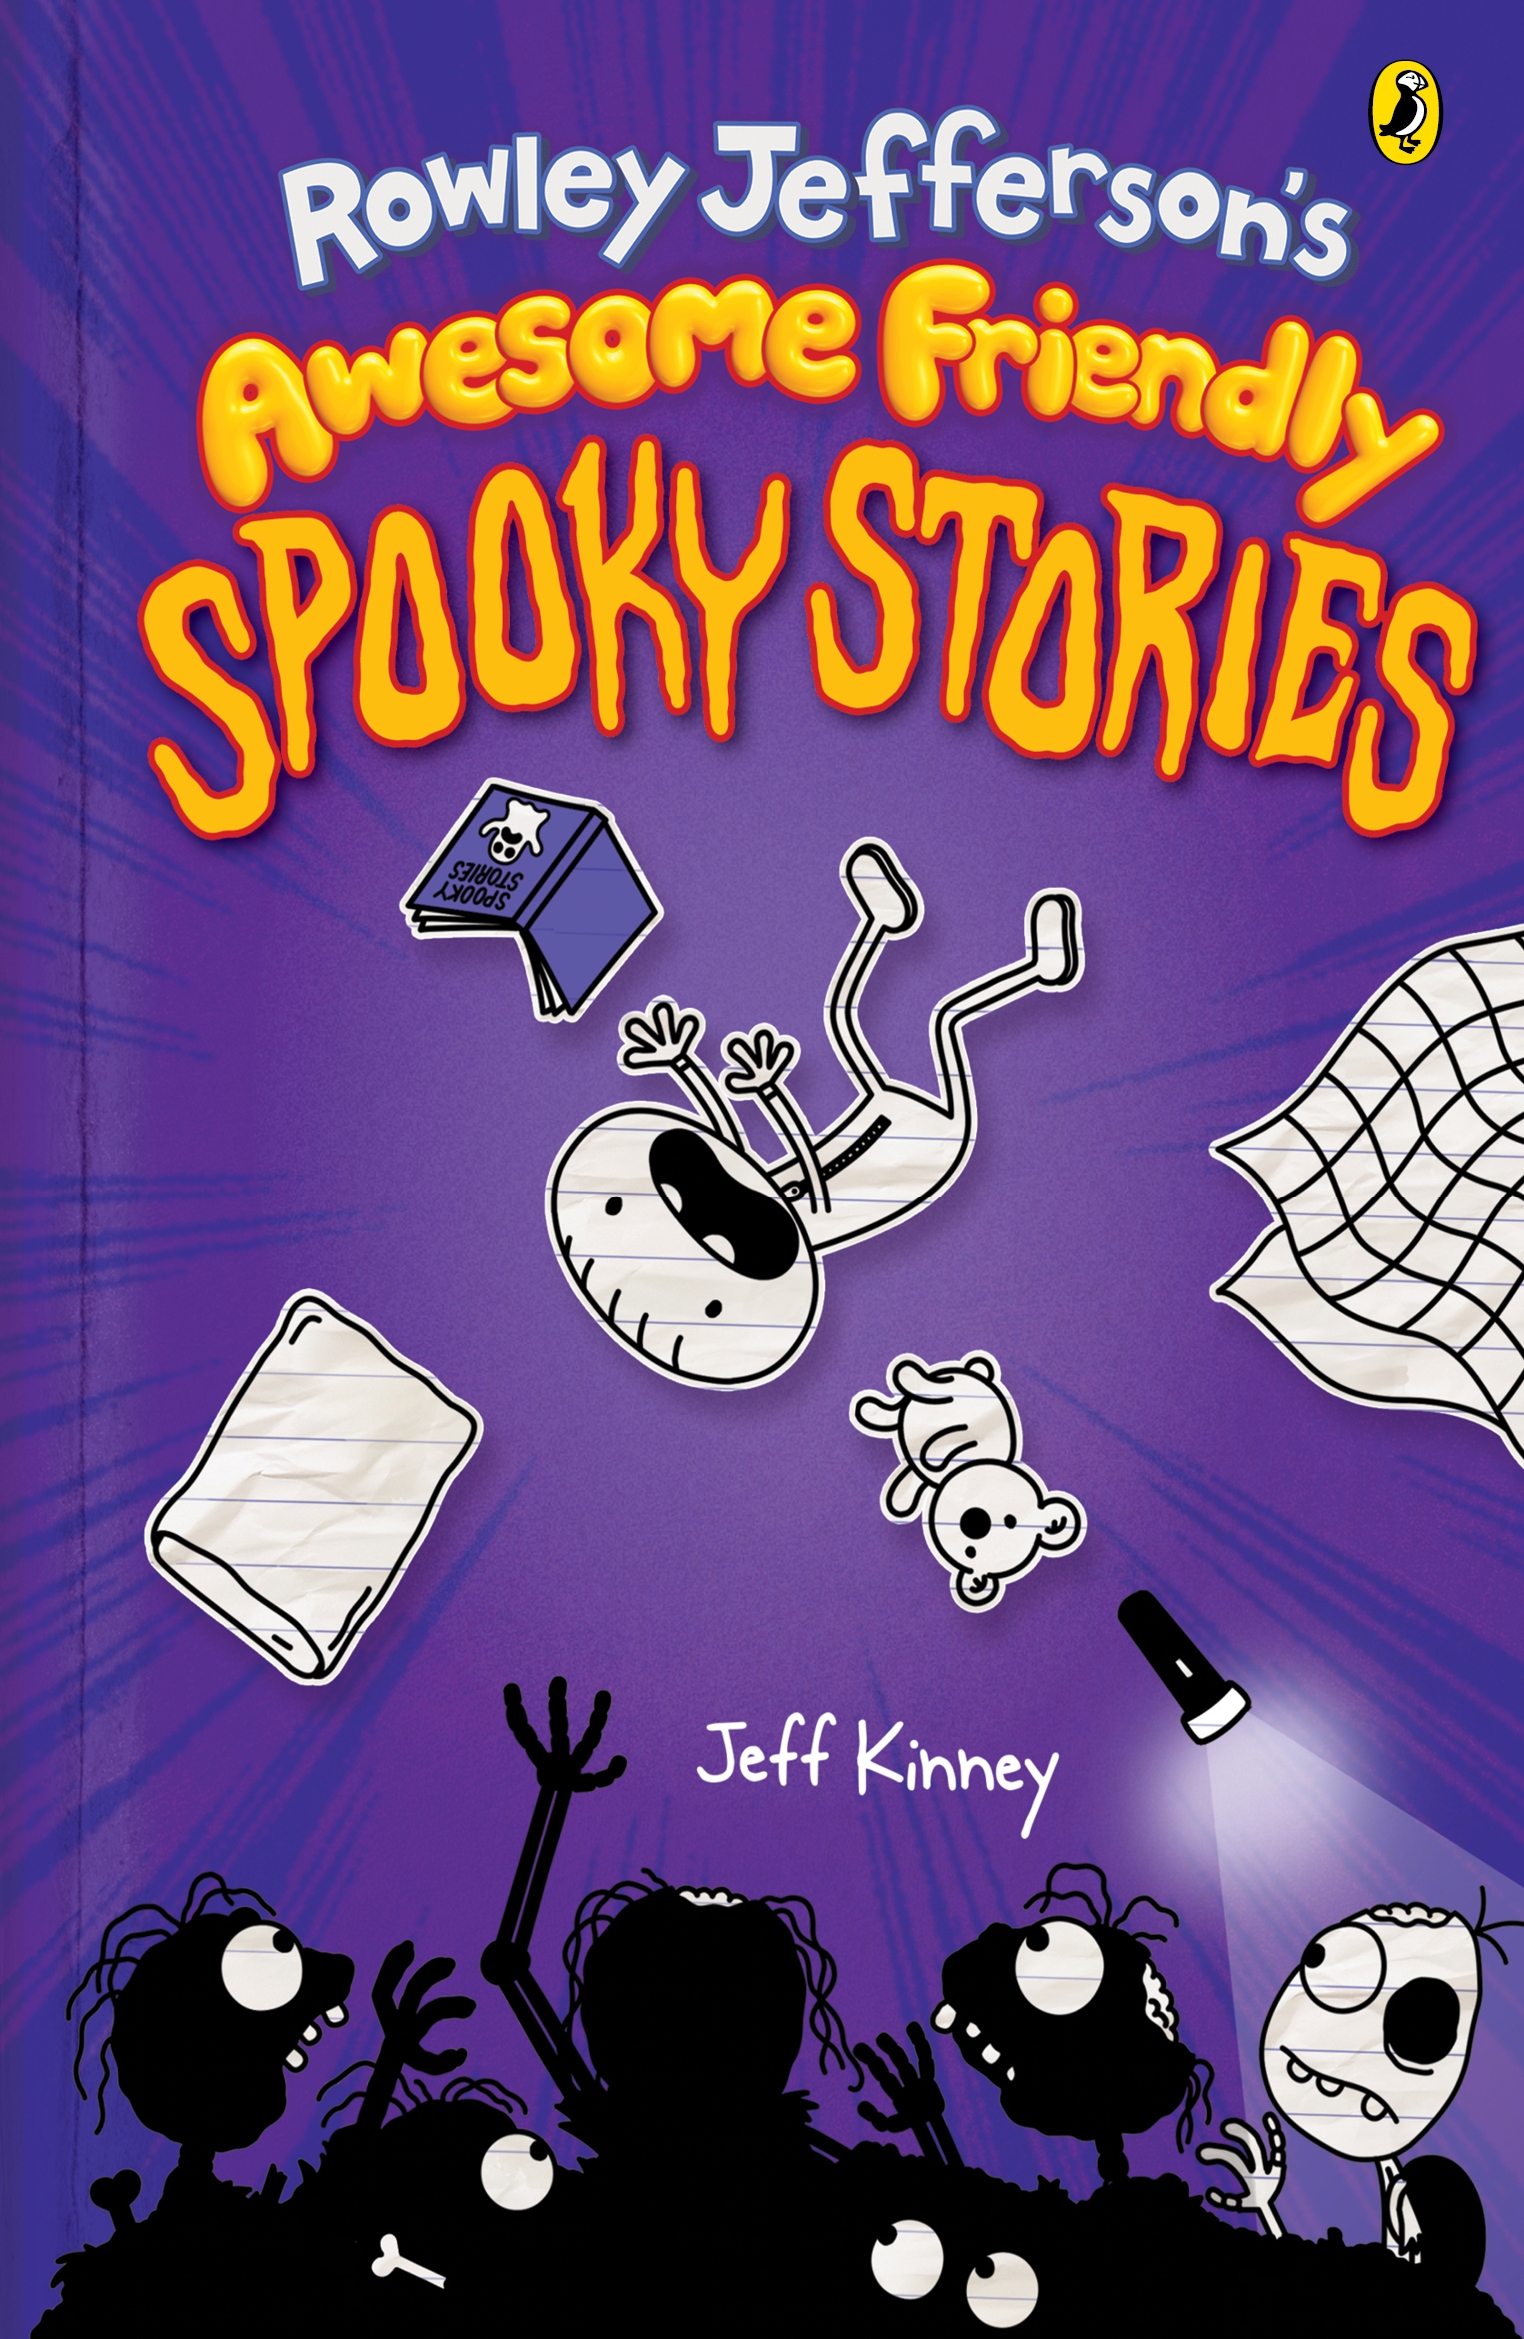 rowley jefferson spooky stories